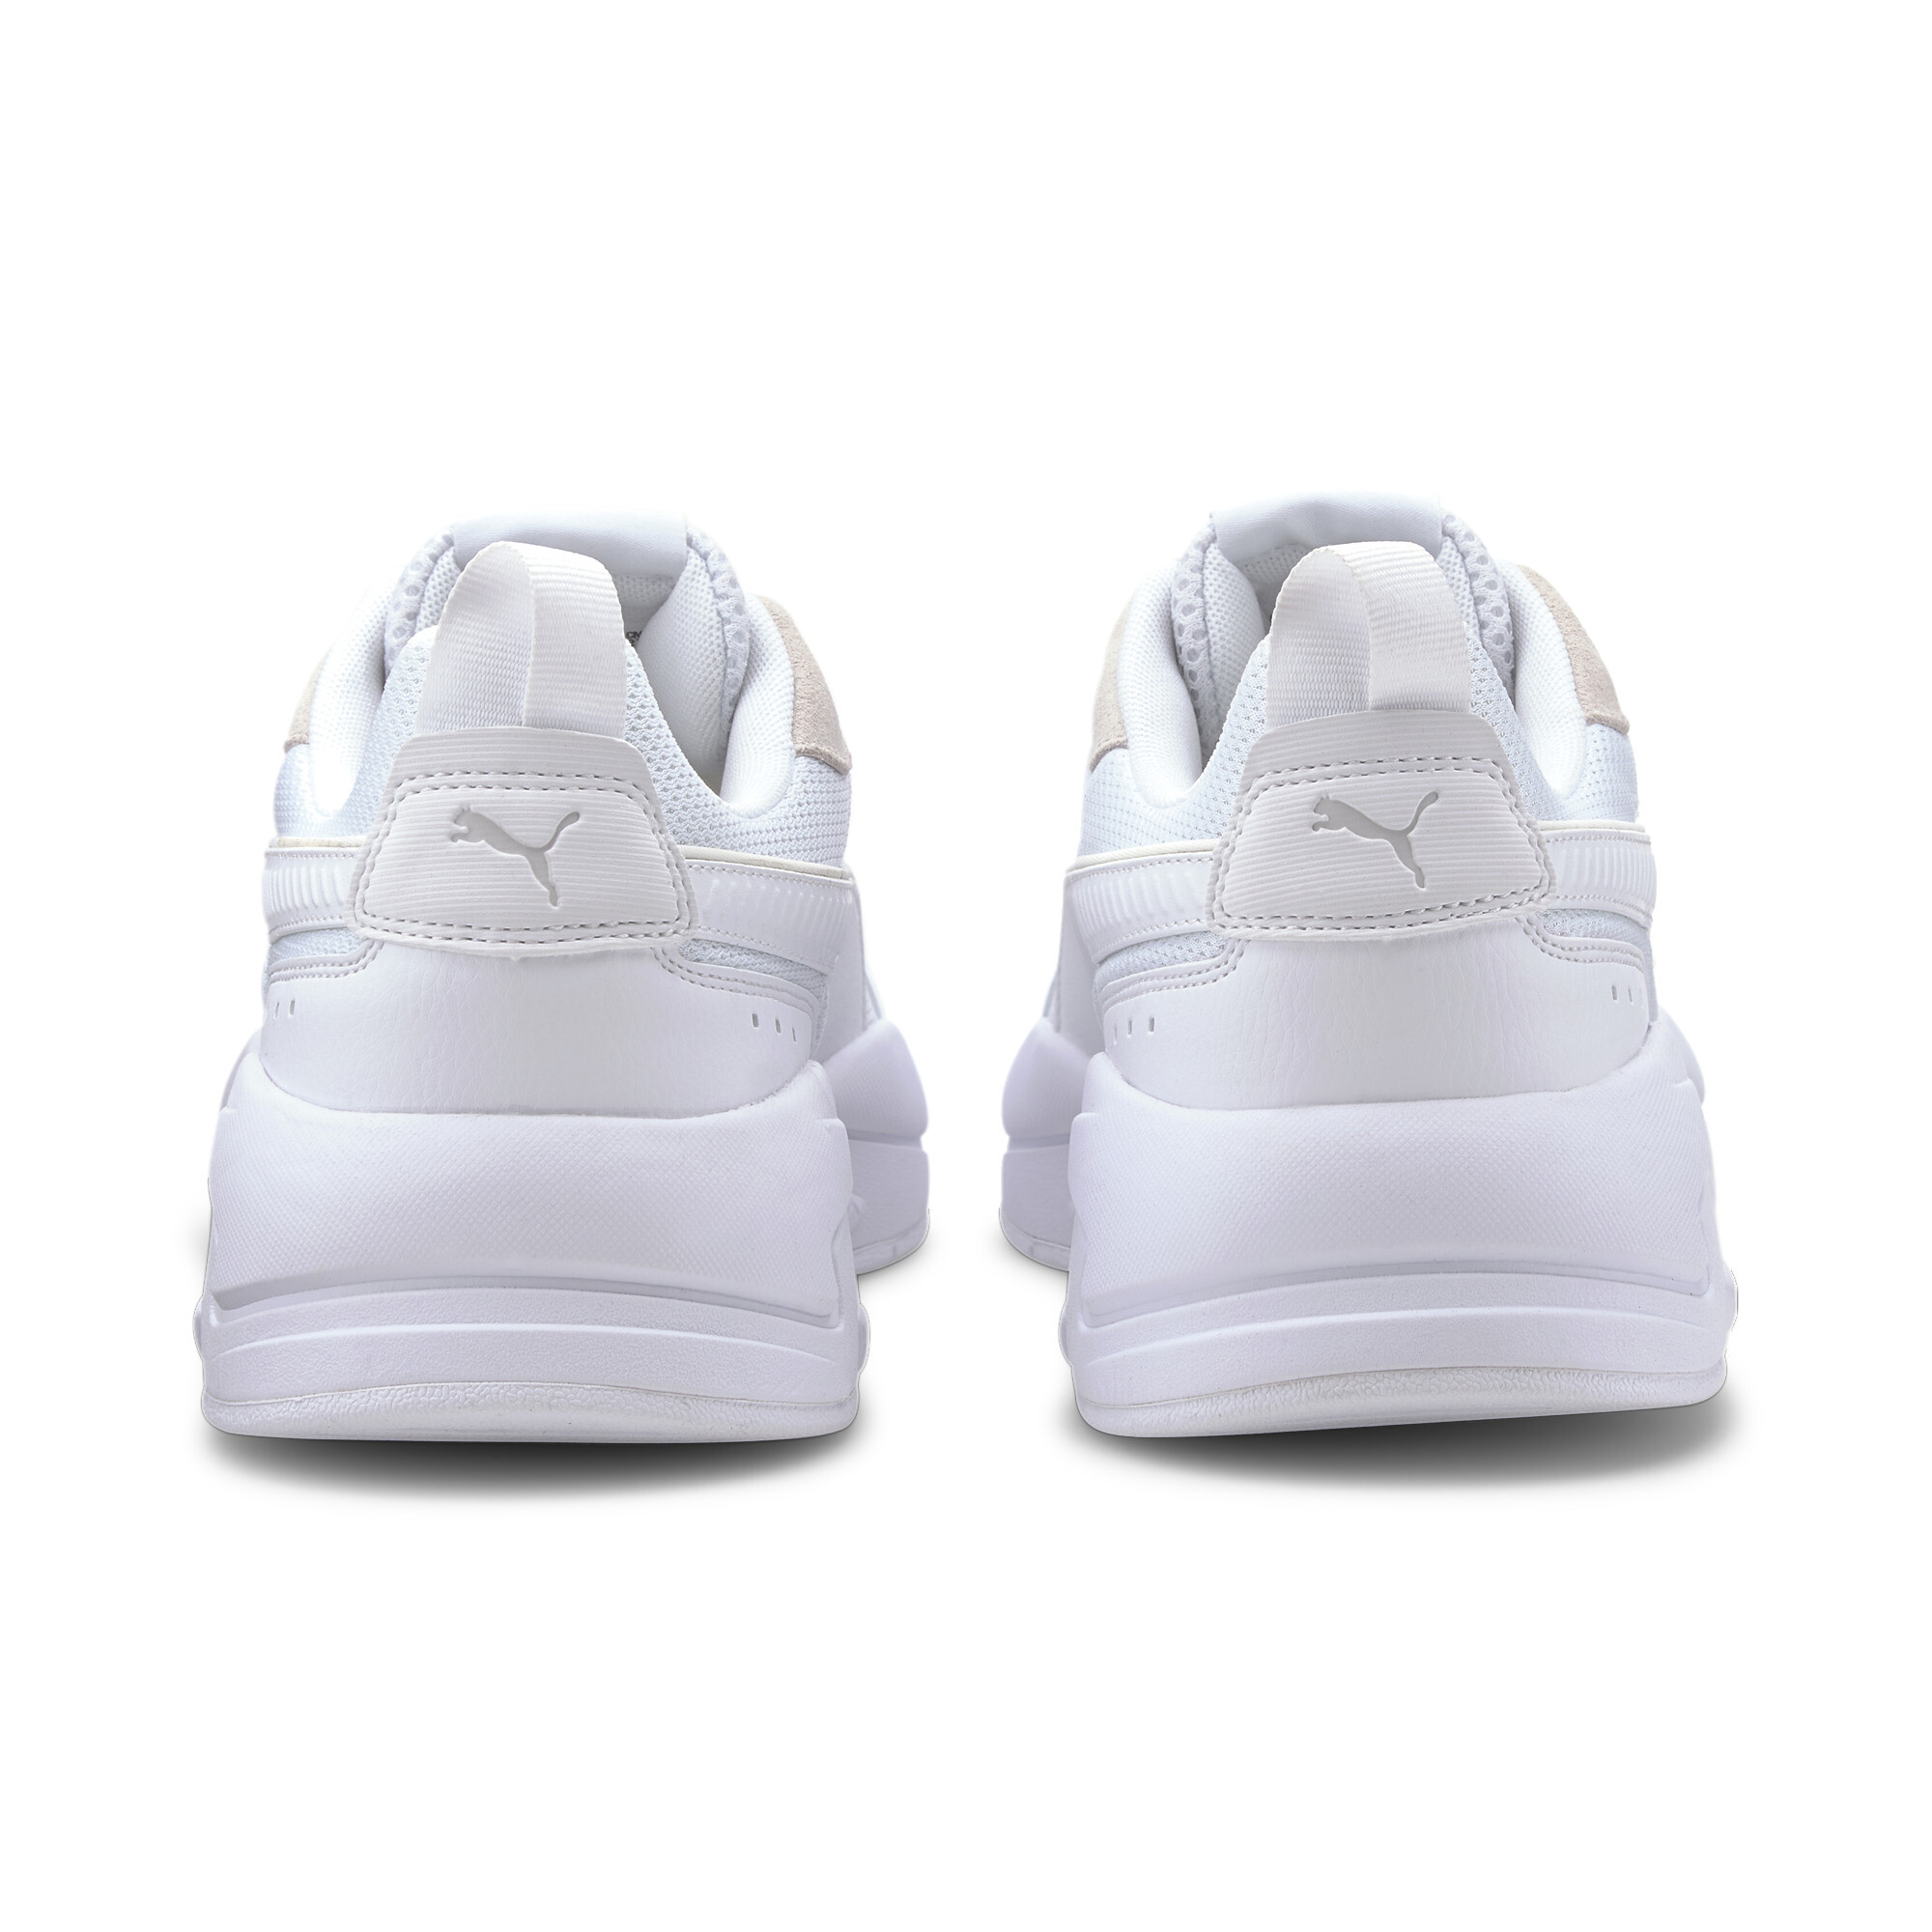 PUMA Men's X-RAY Sneakers | eBay